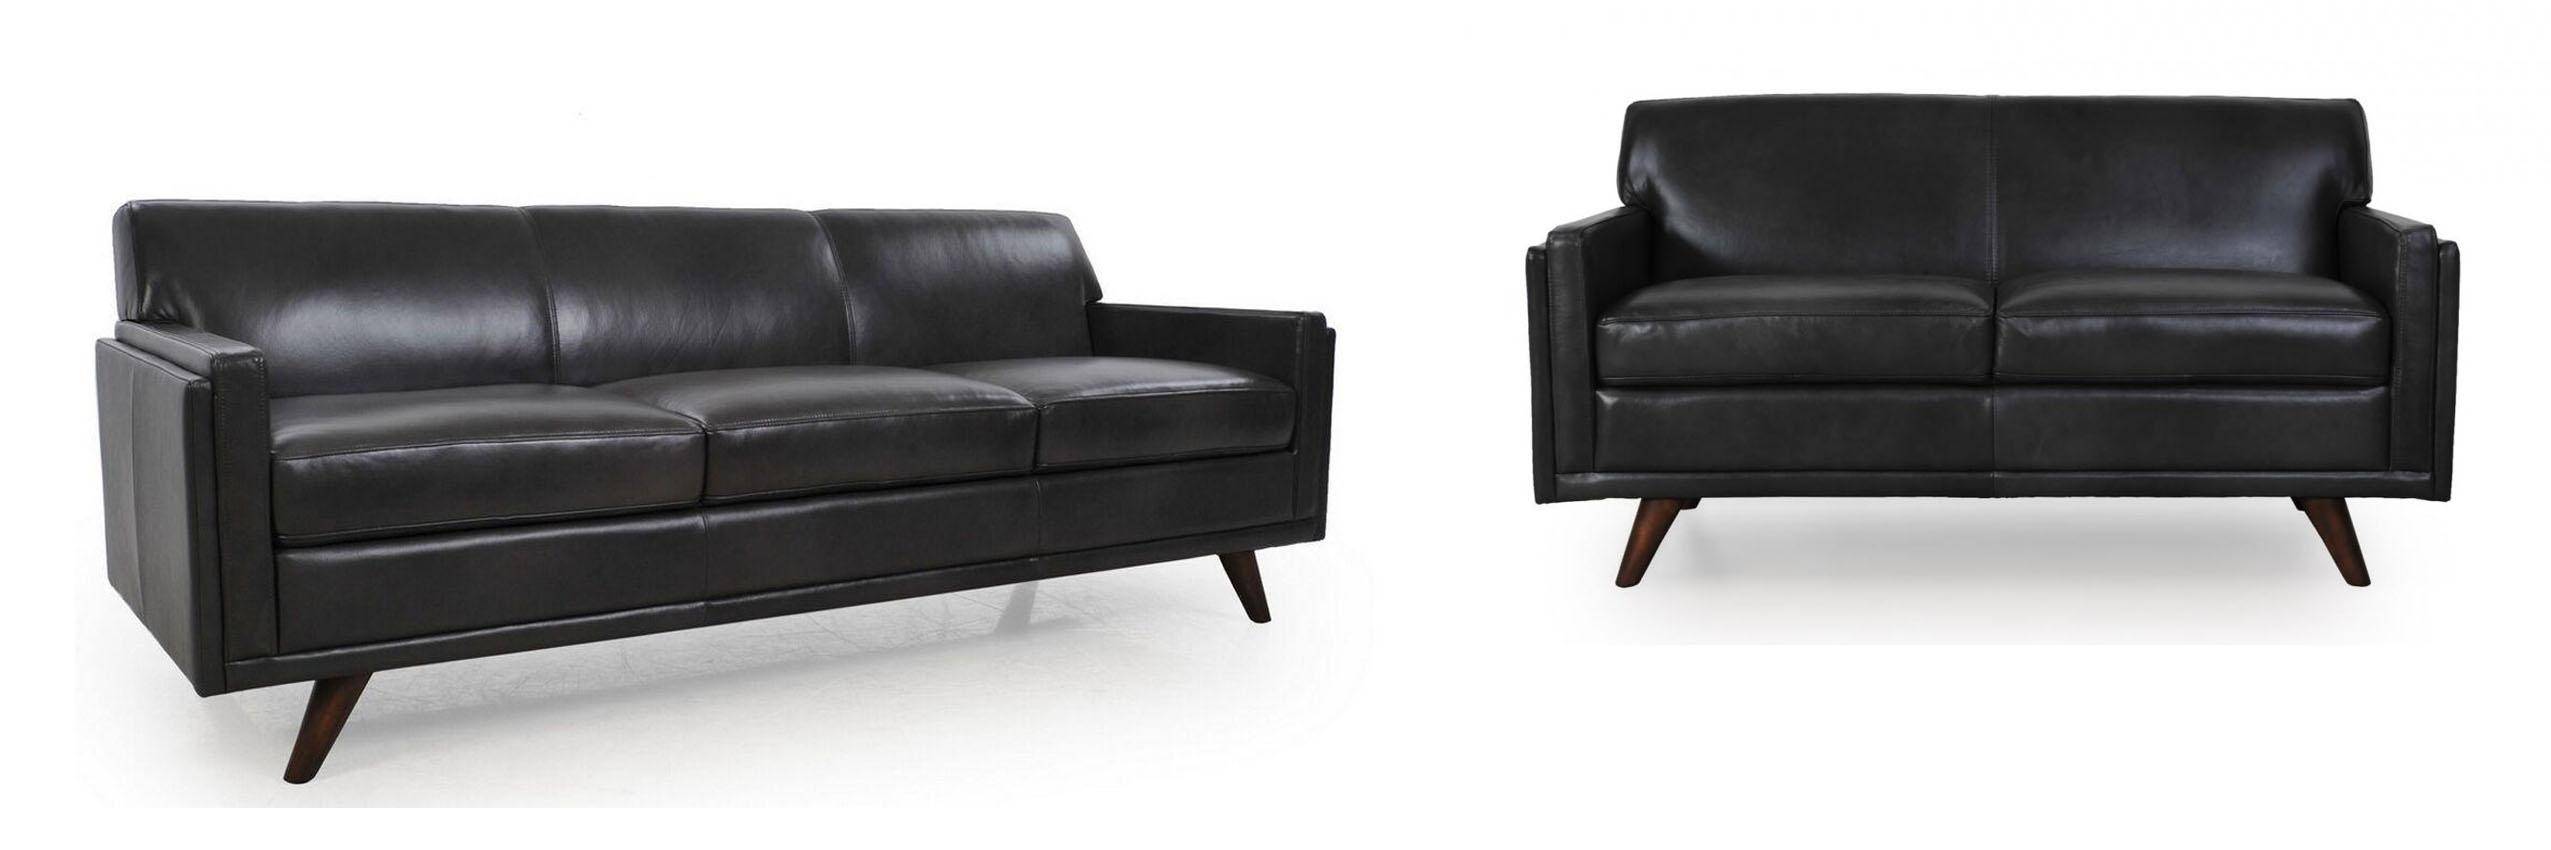 Moroni Milo 361 Sofa And Loveseat 2, Moroni Leather Furniture